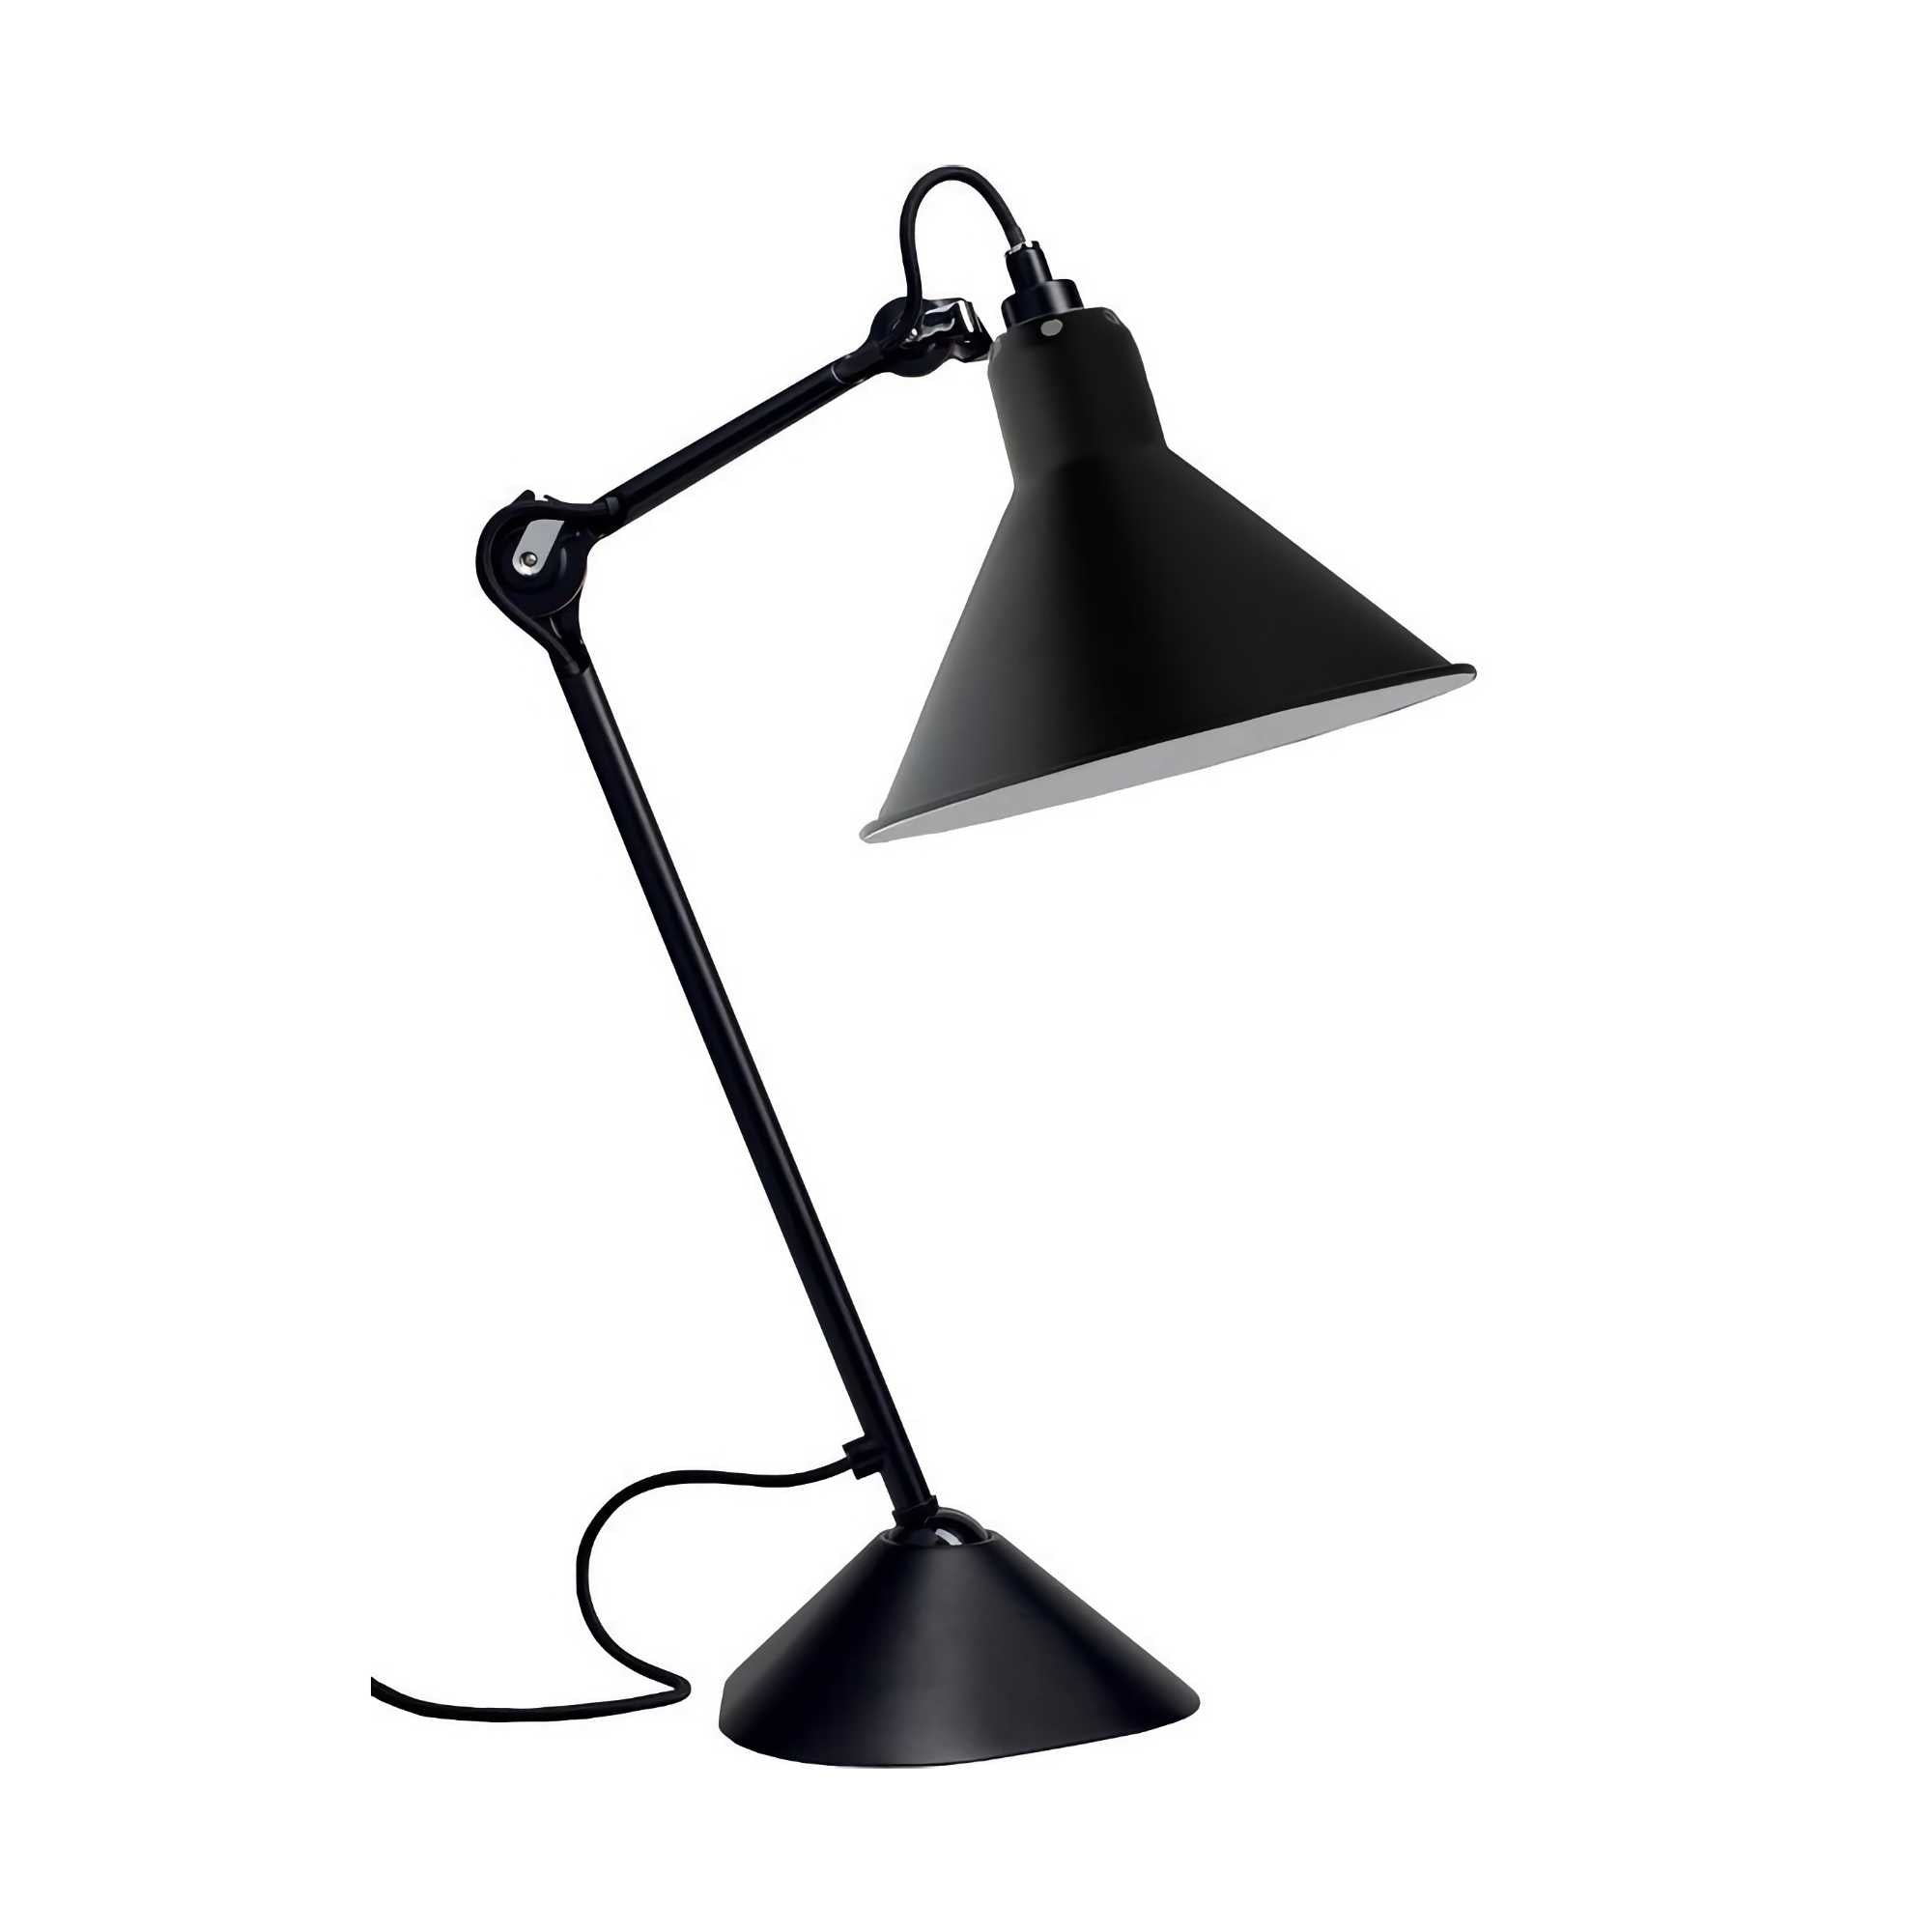 DCW editions Lampe Gras 205 Conic Table Lamp, matt black